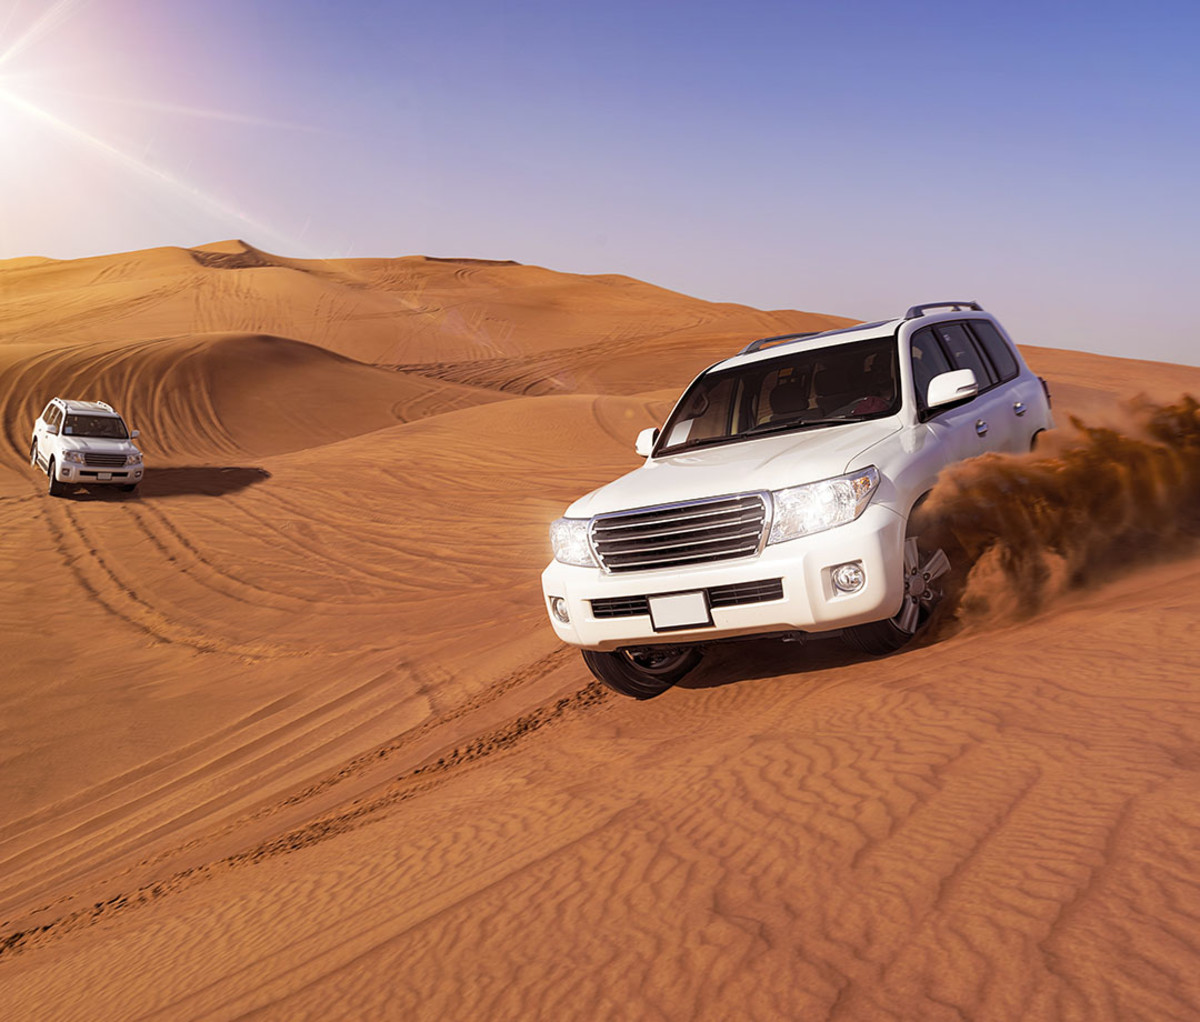 Four-wheel safari vehicles driving through the Arabian Desert